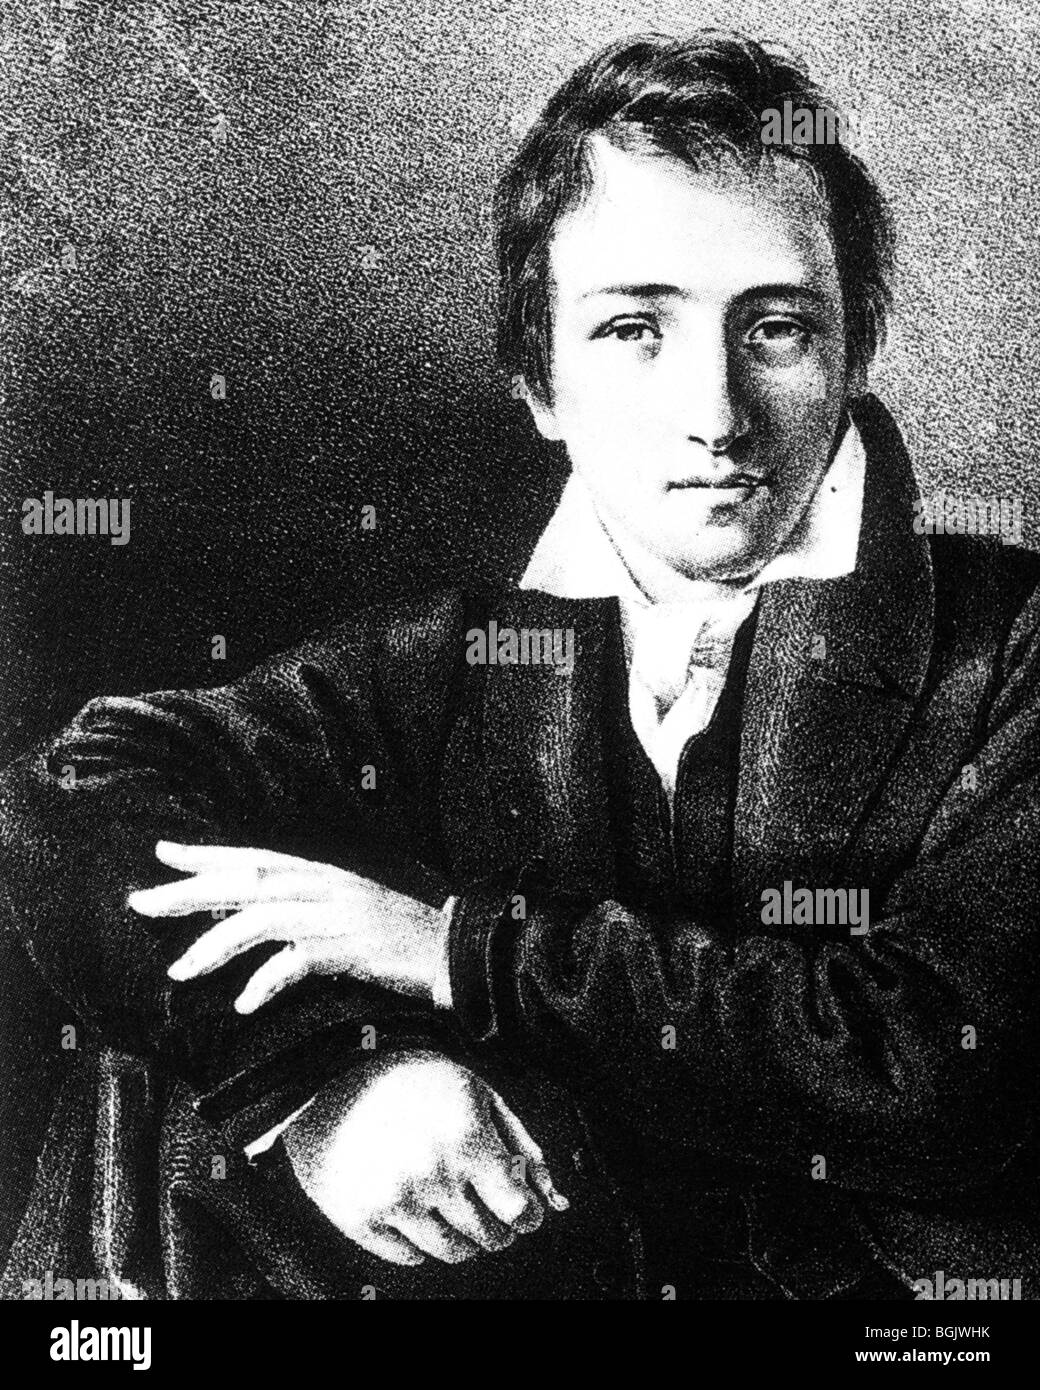 HEINRICH HEINE - poeta tedesco (1797-1856) Foto Stock